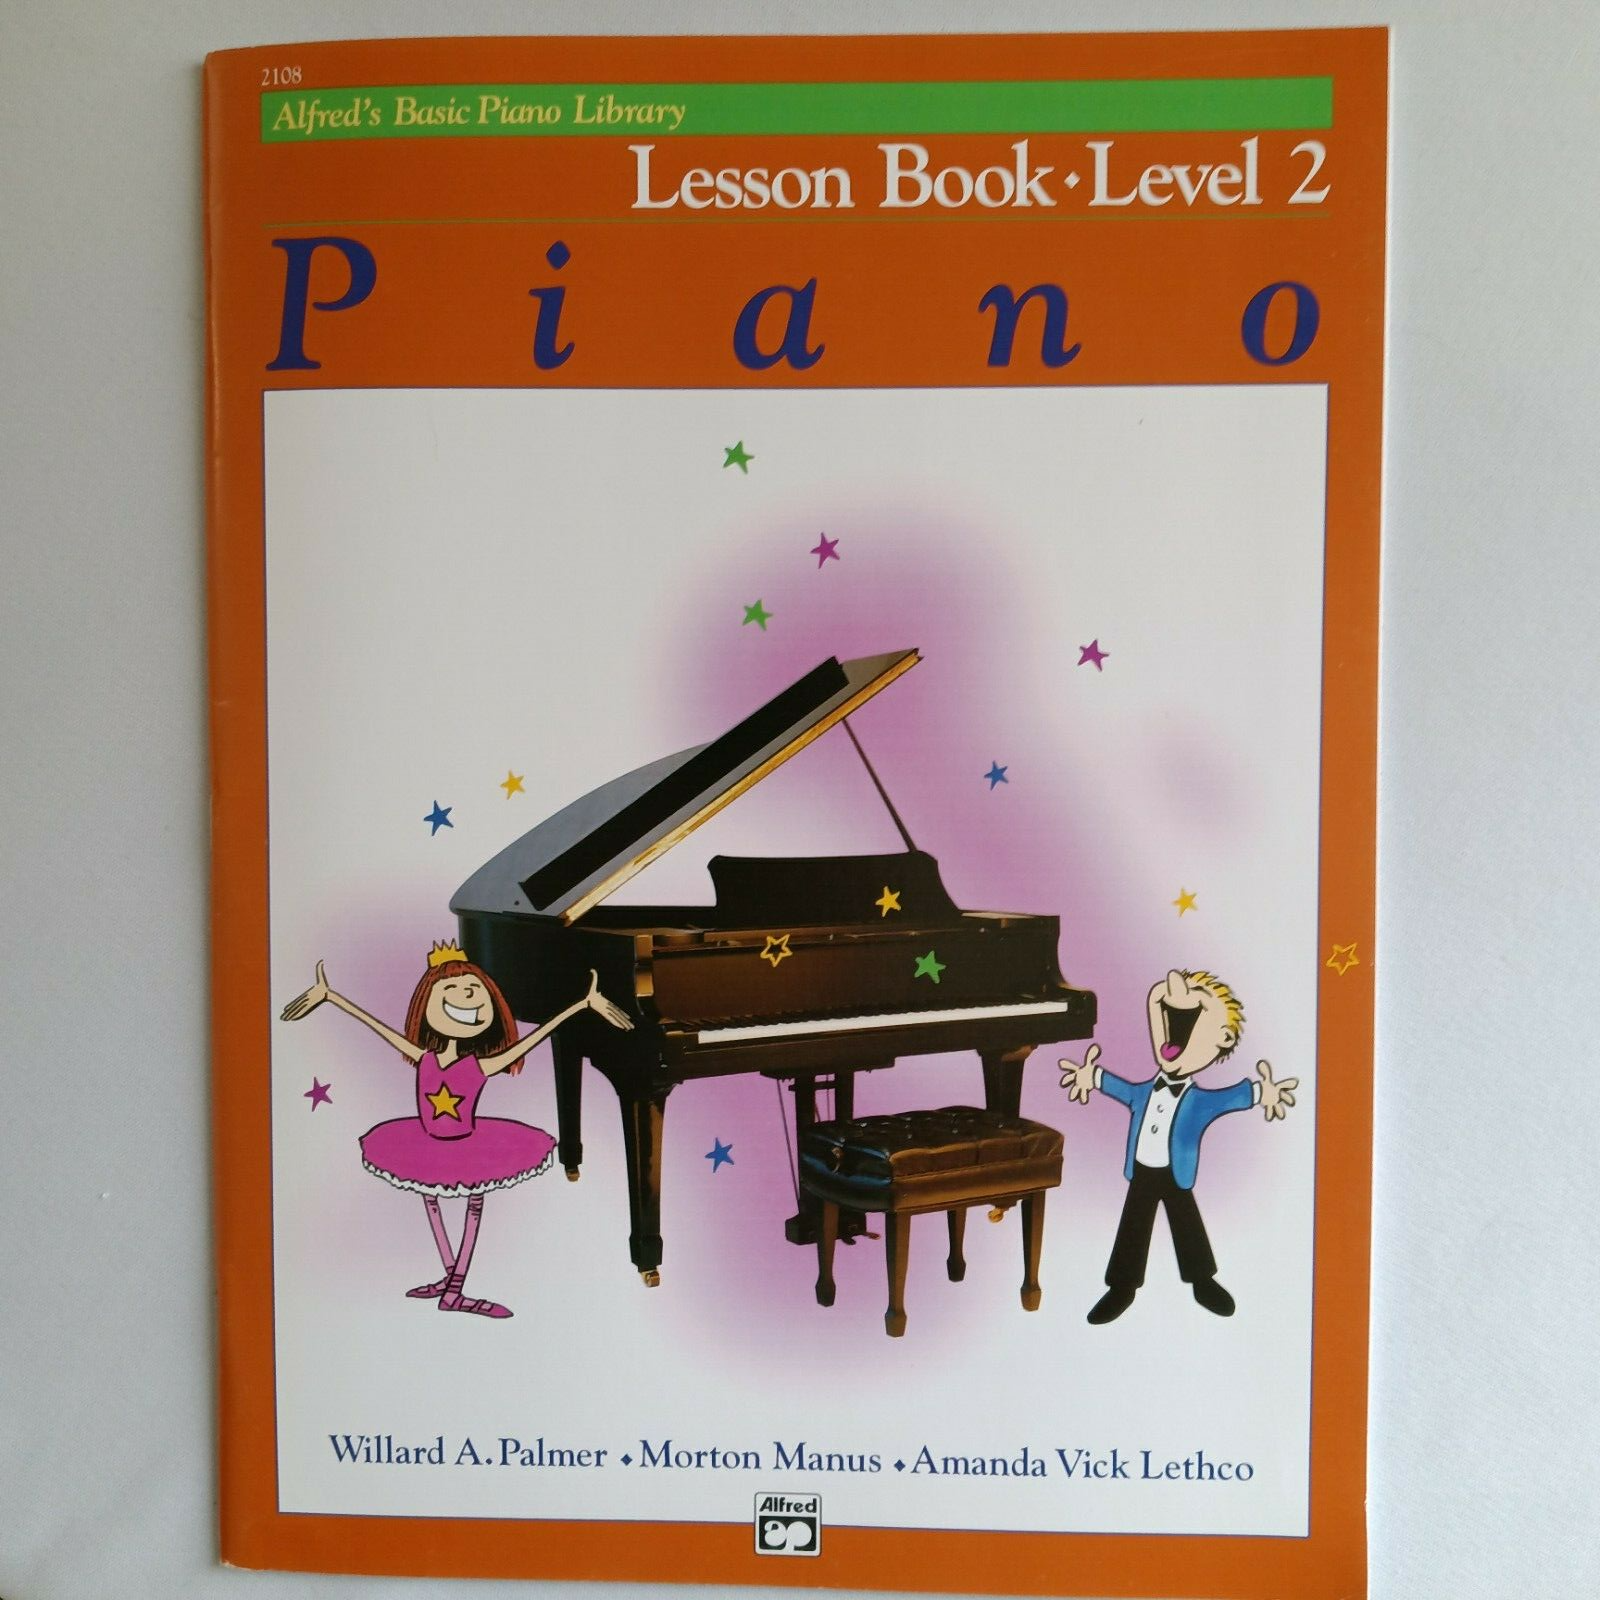 LESSON Book Level 2 Piano, Alfred's Basic Piano Library, #2108,